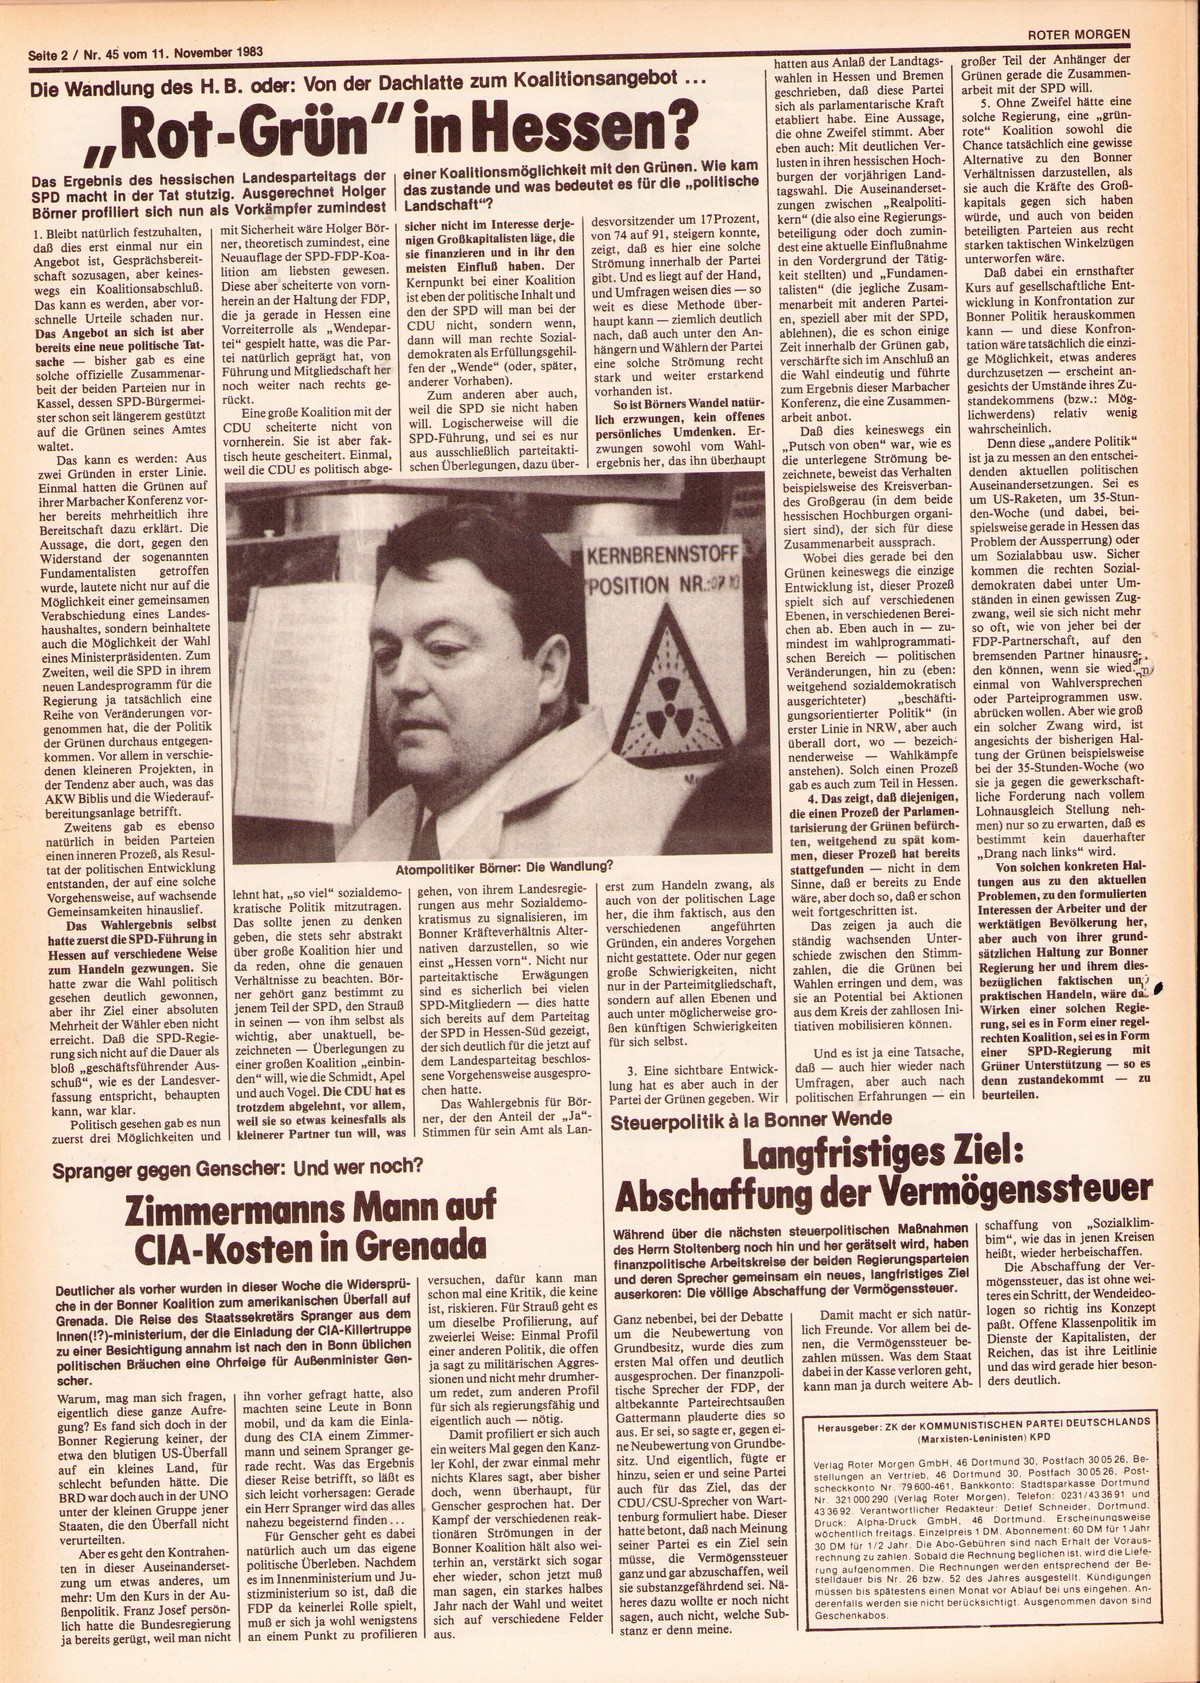 Roter Morgen, 17. Jg., 11. November 1983, Nr. 45, Seite 2